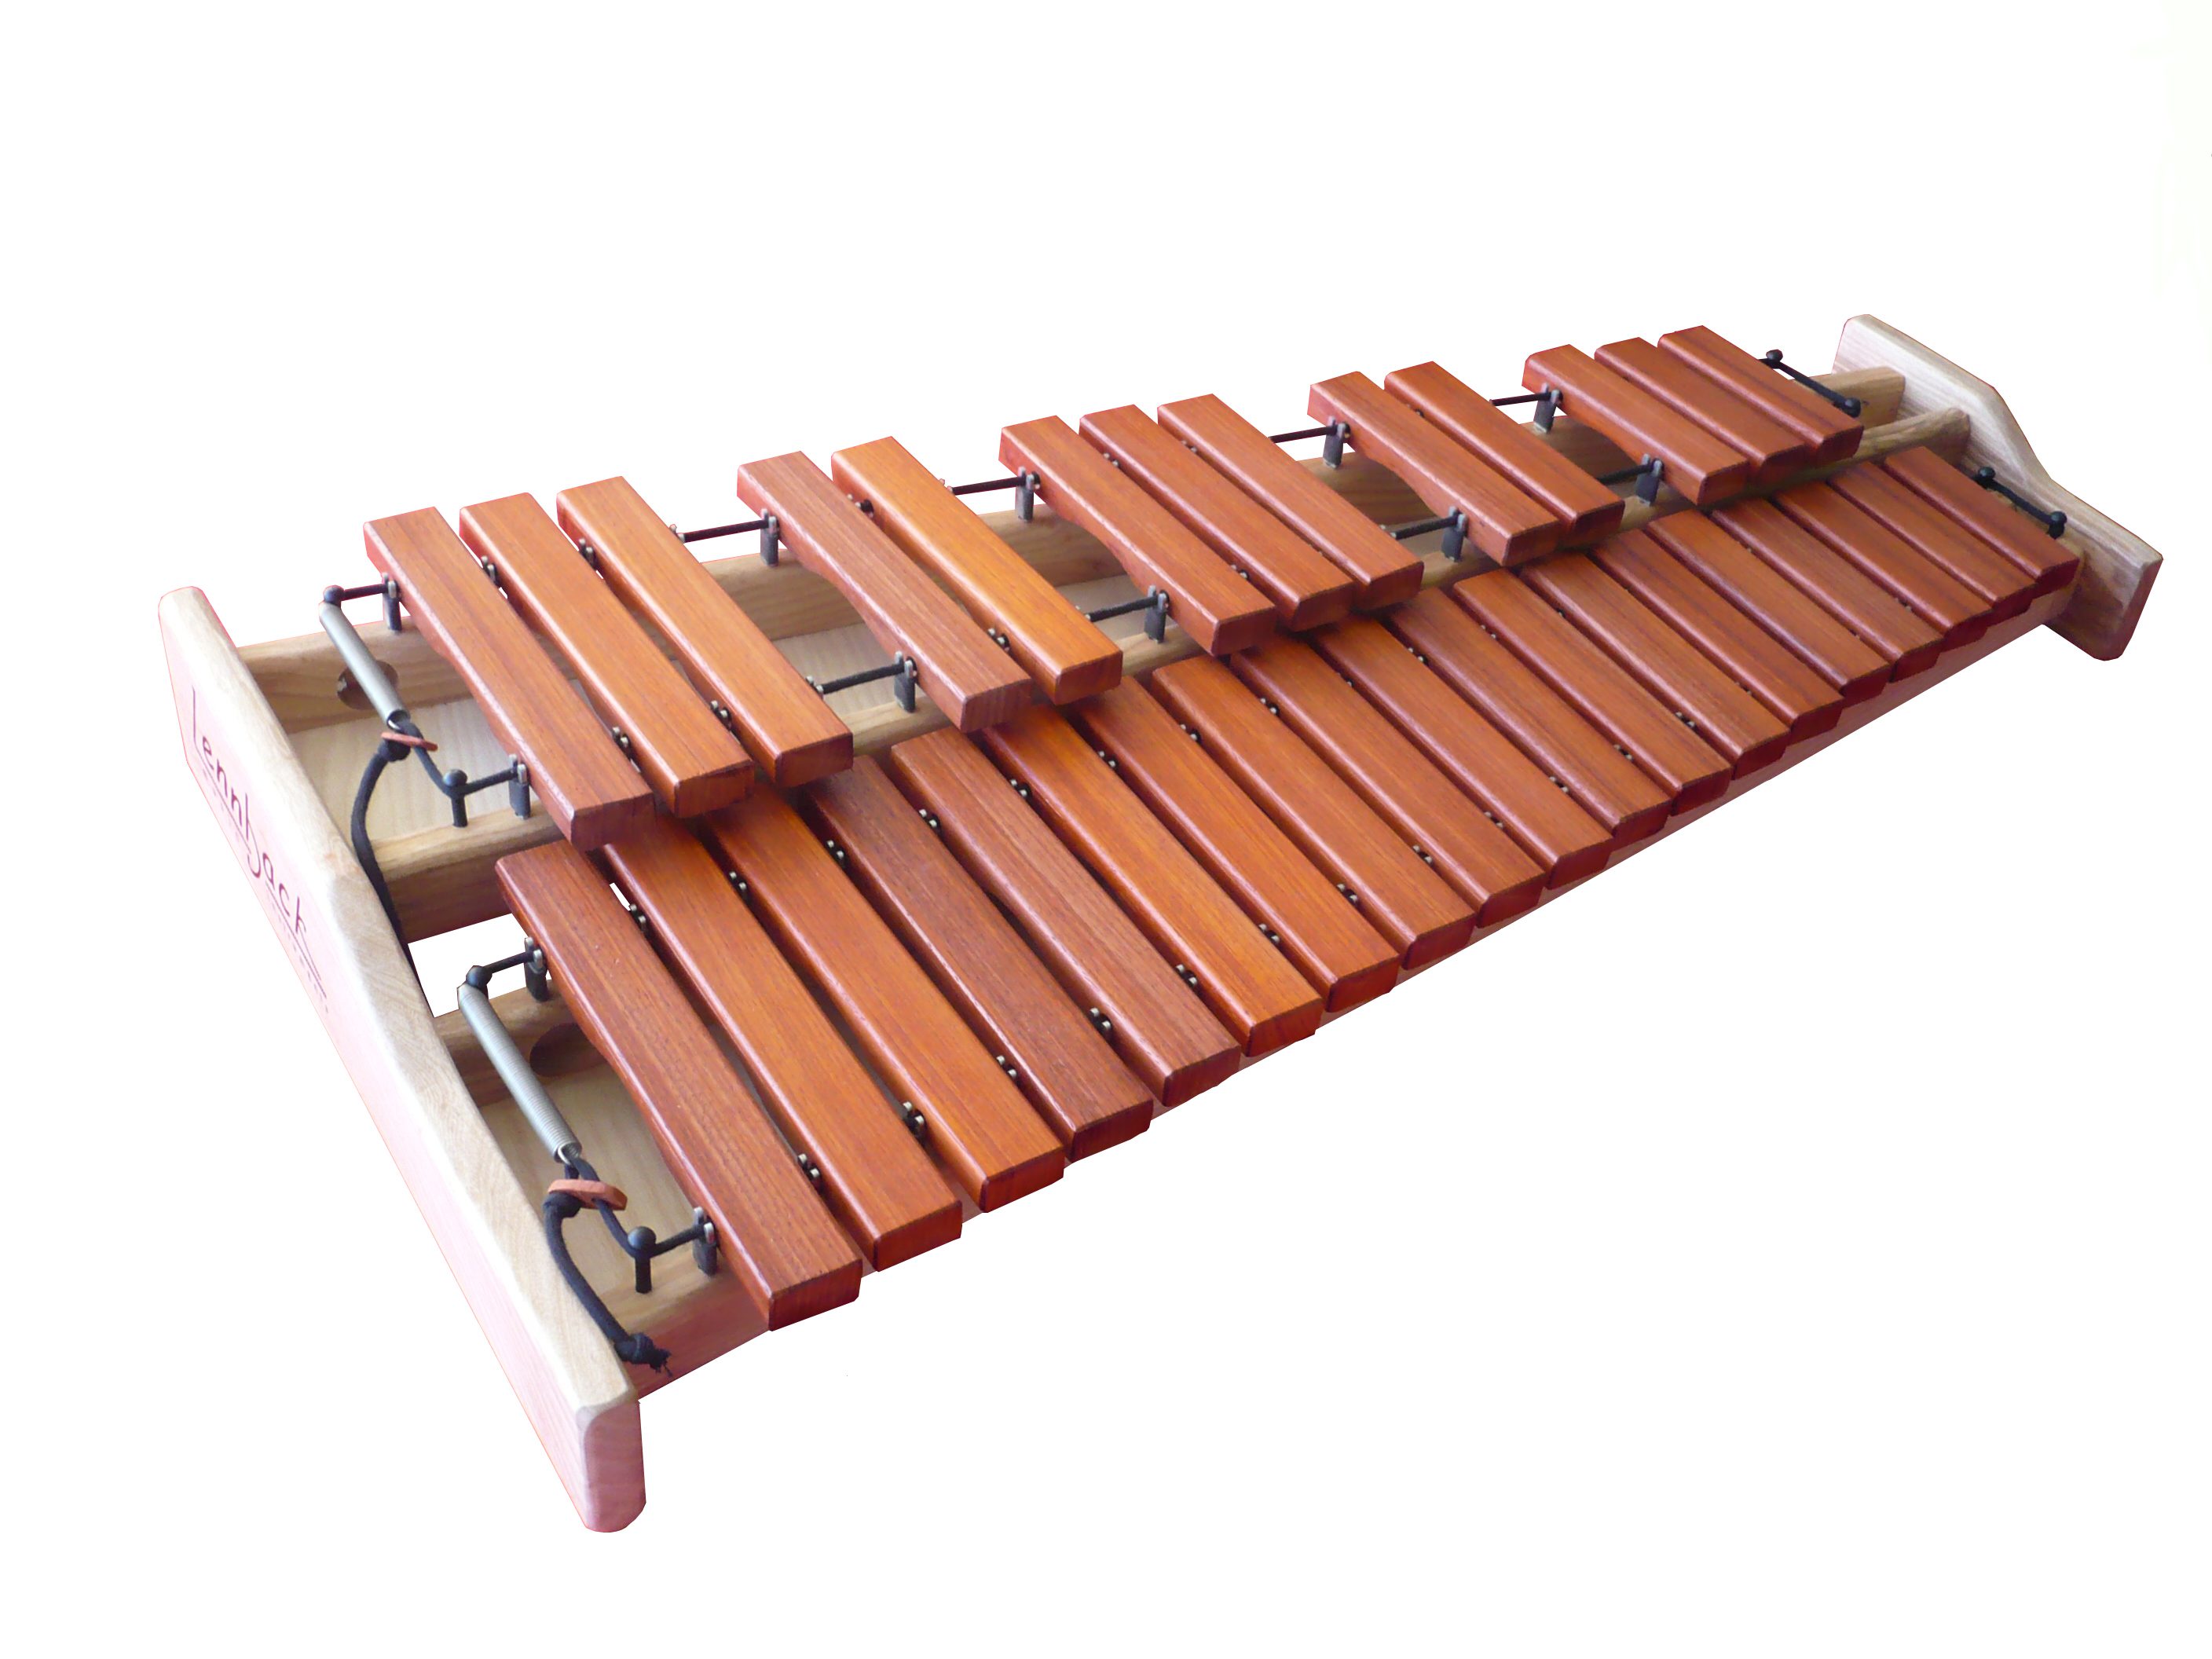 Rêves : rêver de xylophone